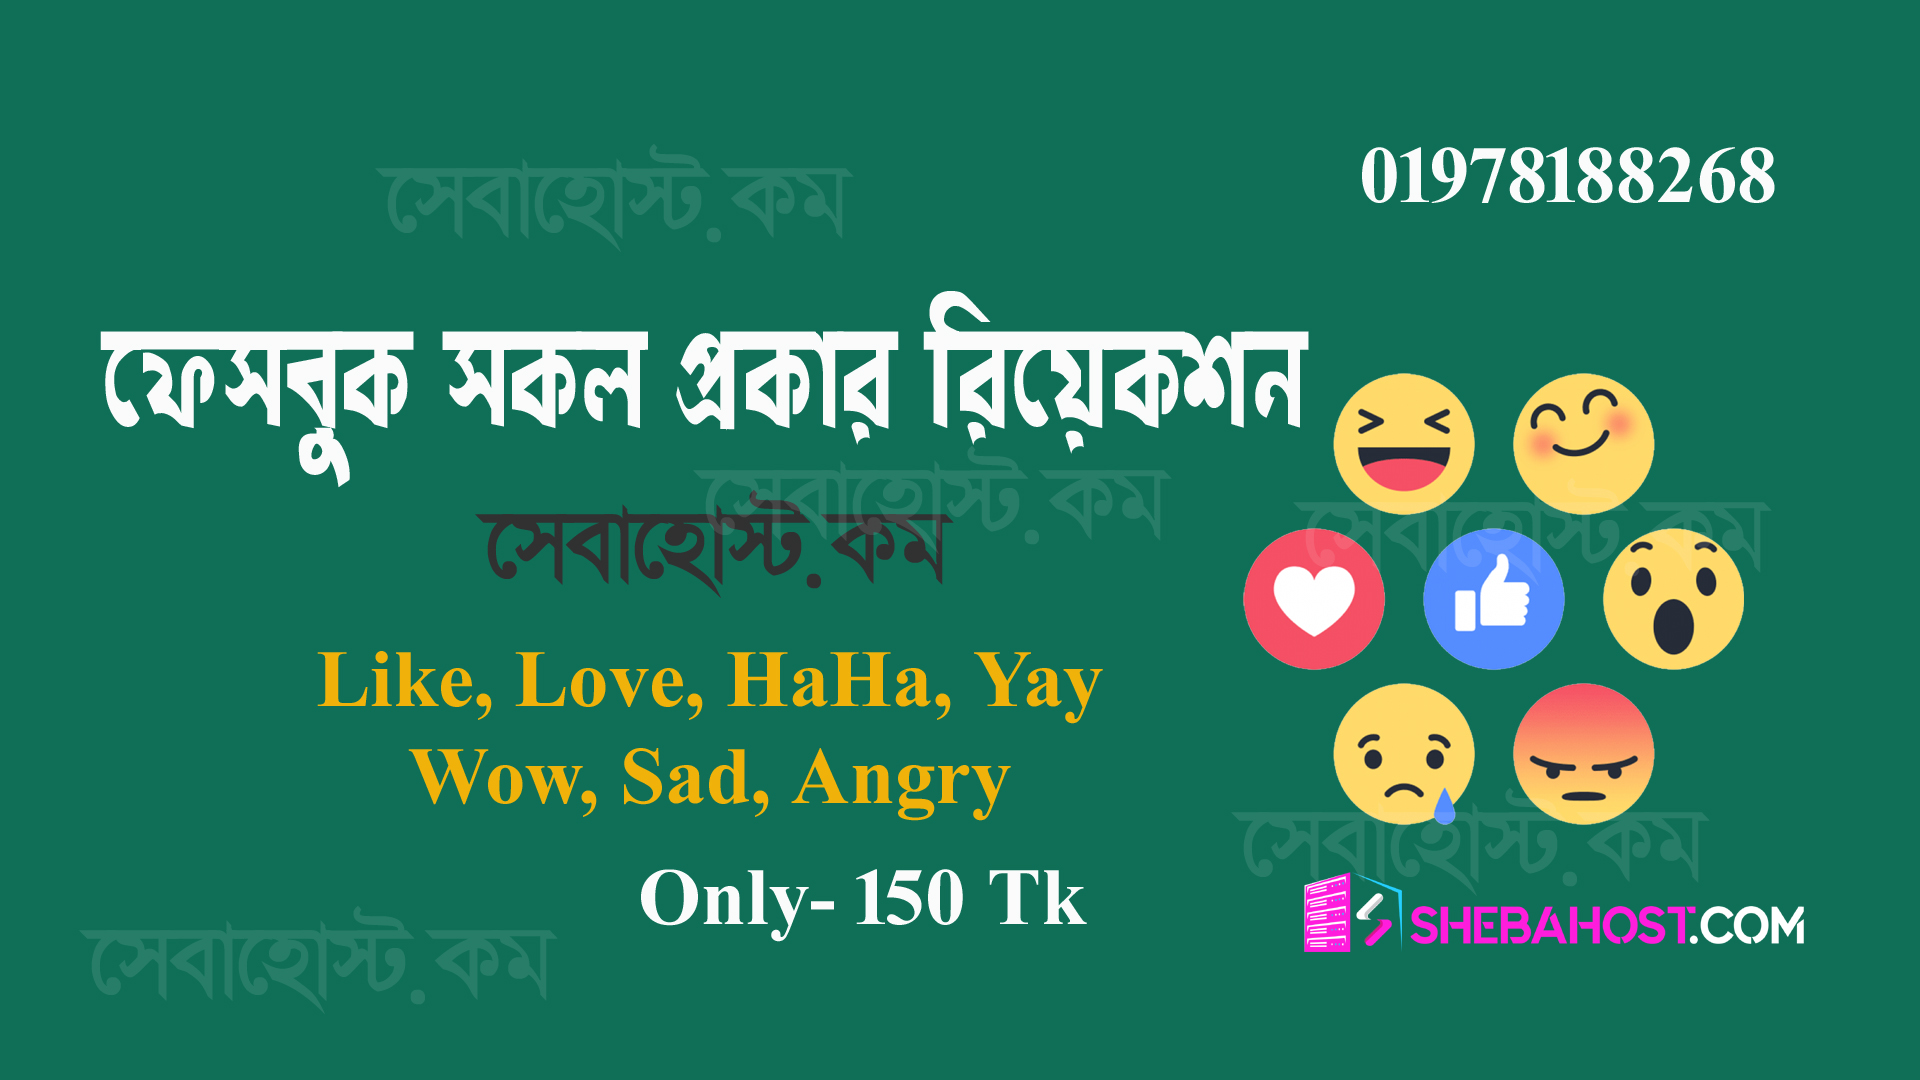 1082442000+ Bangladesh Website Traffic, Quality Real Web Traffic